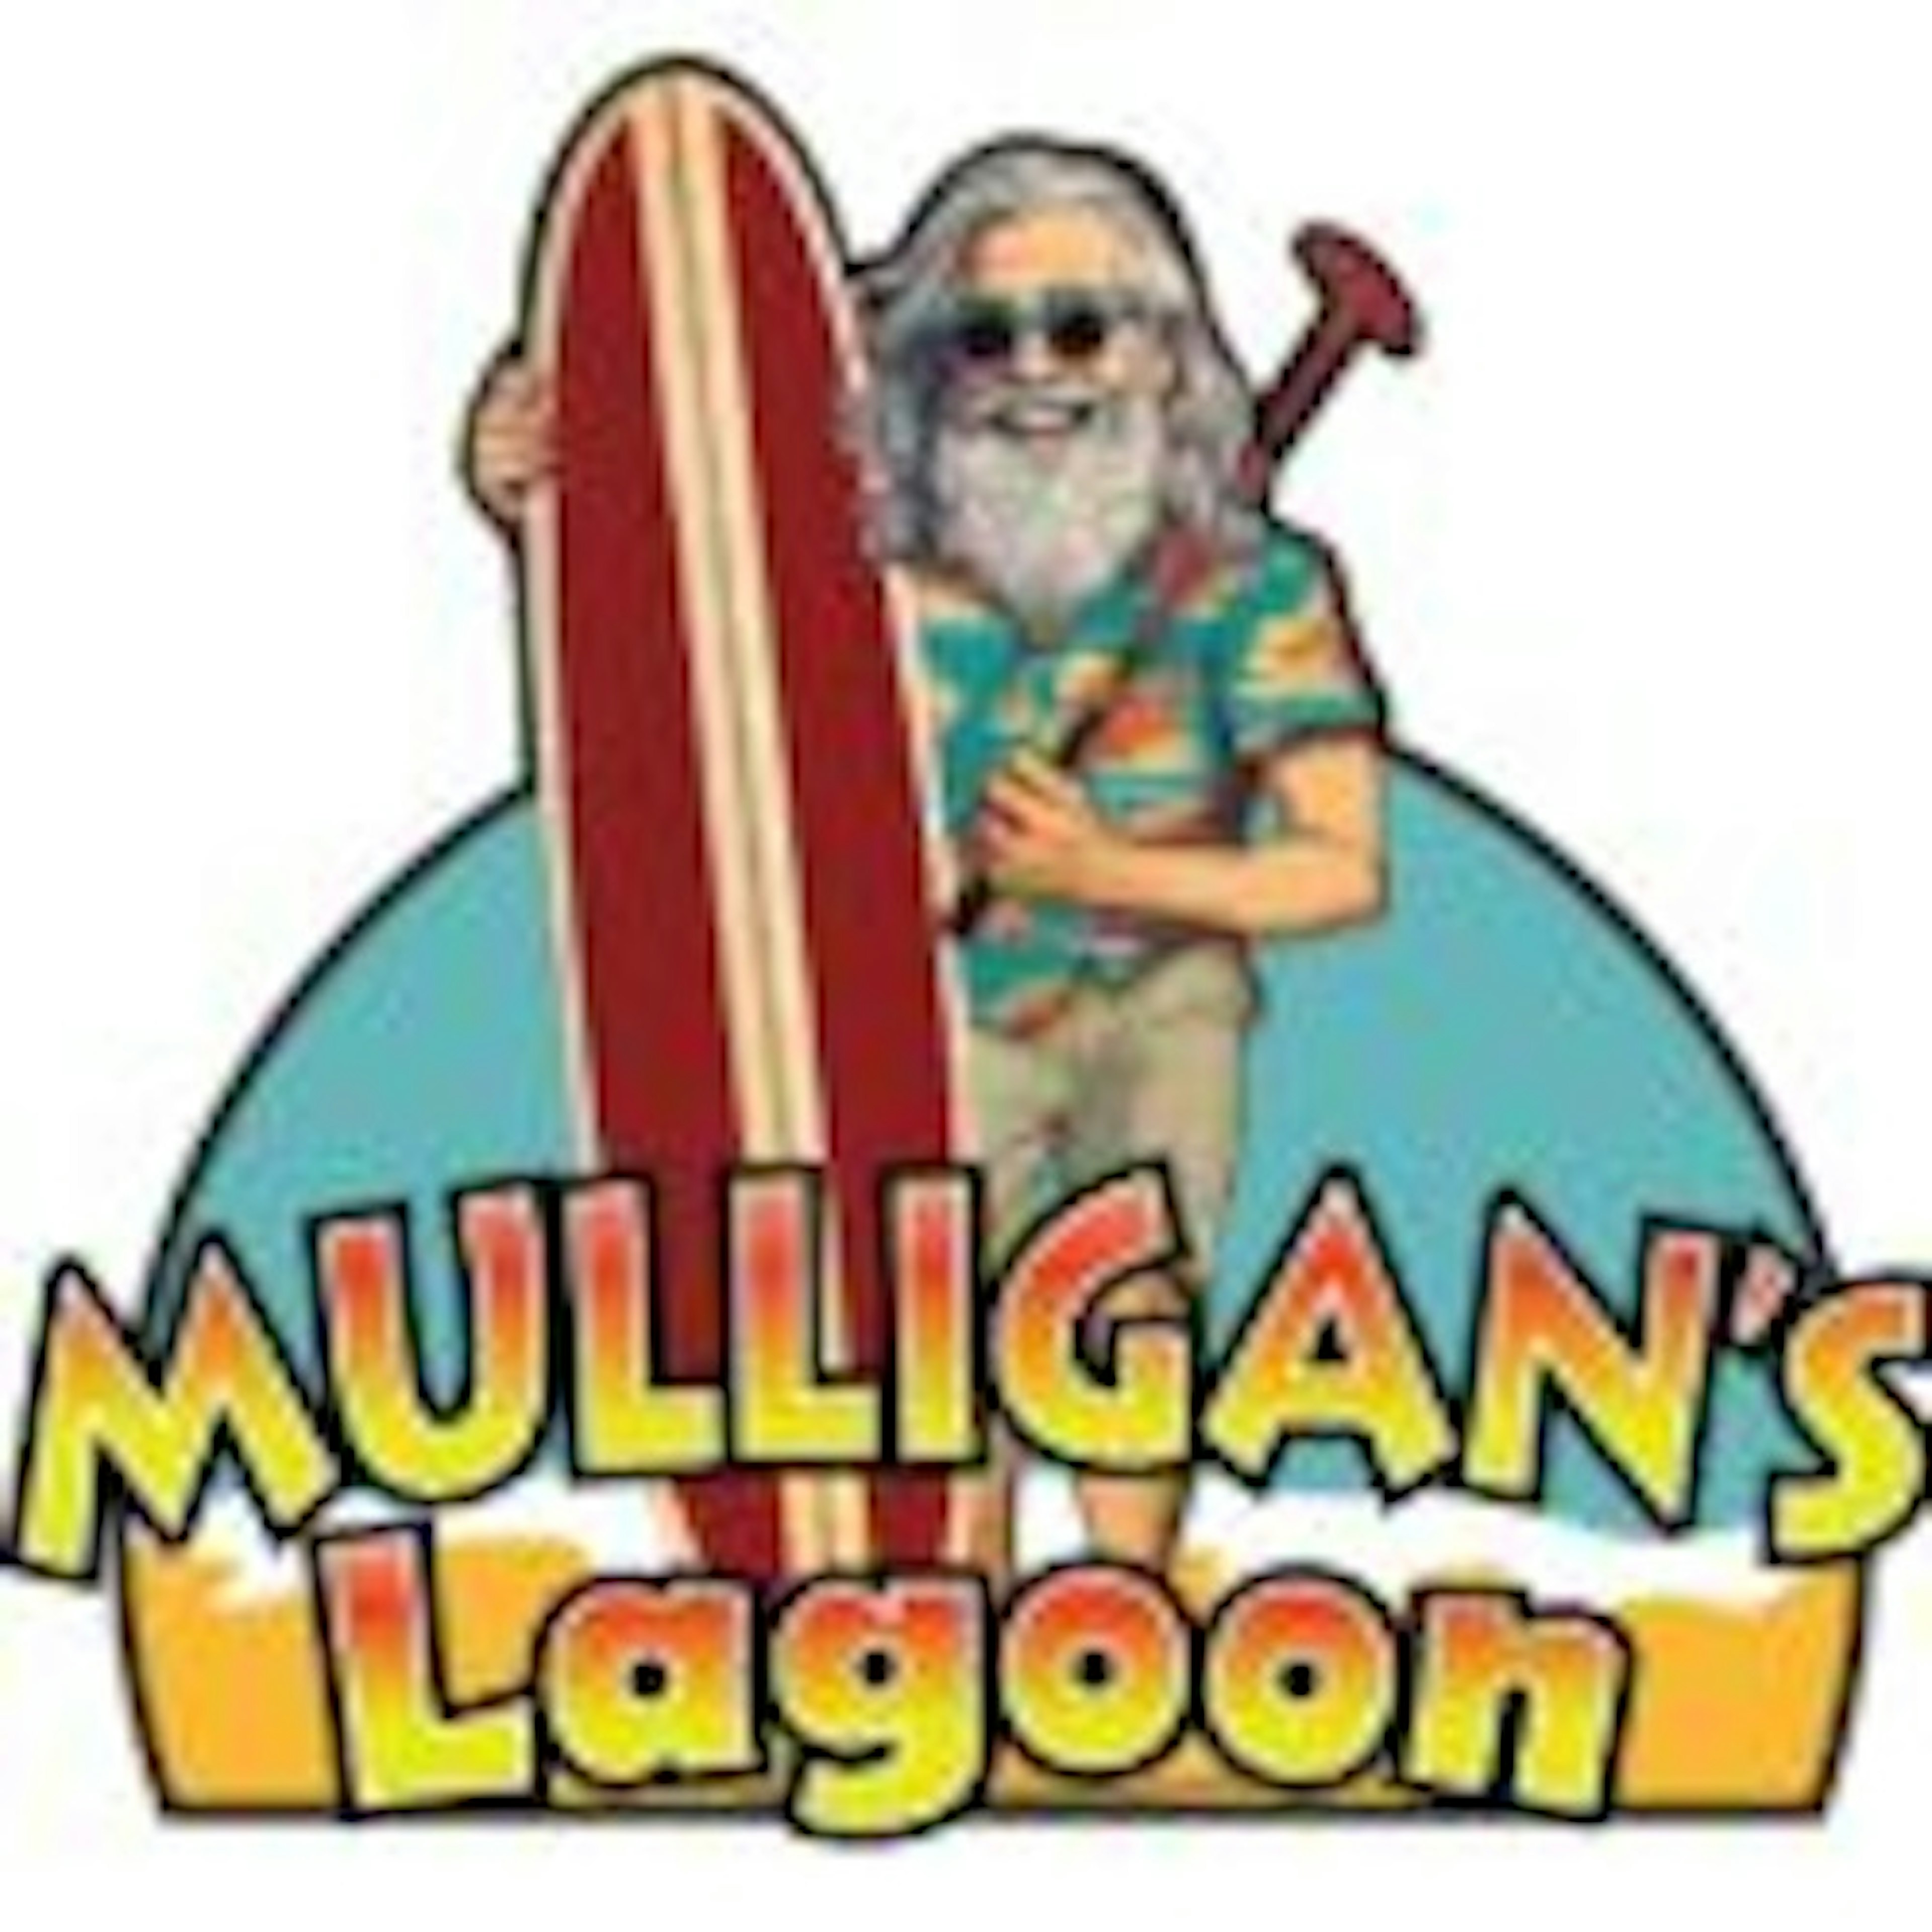 Mulligan’s Lagoon